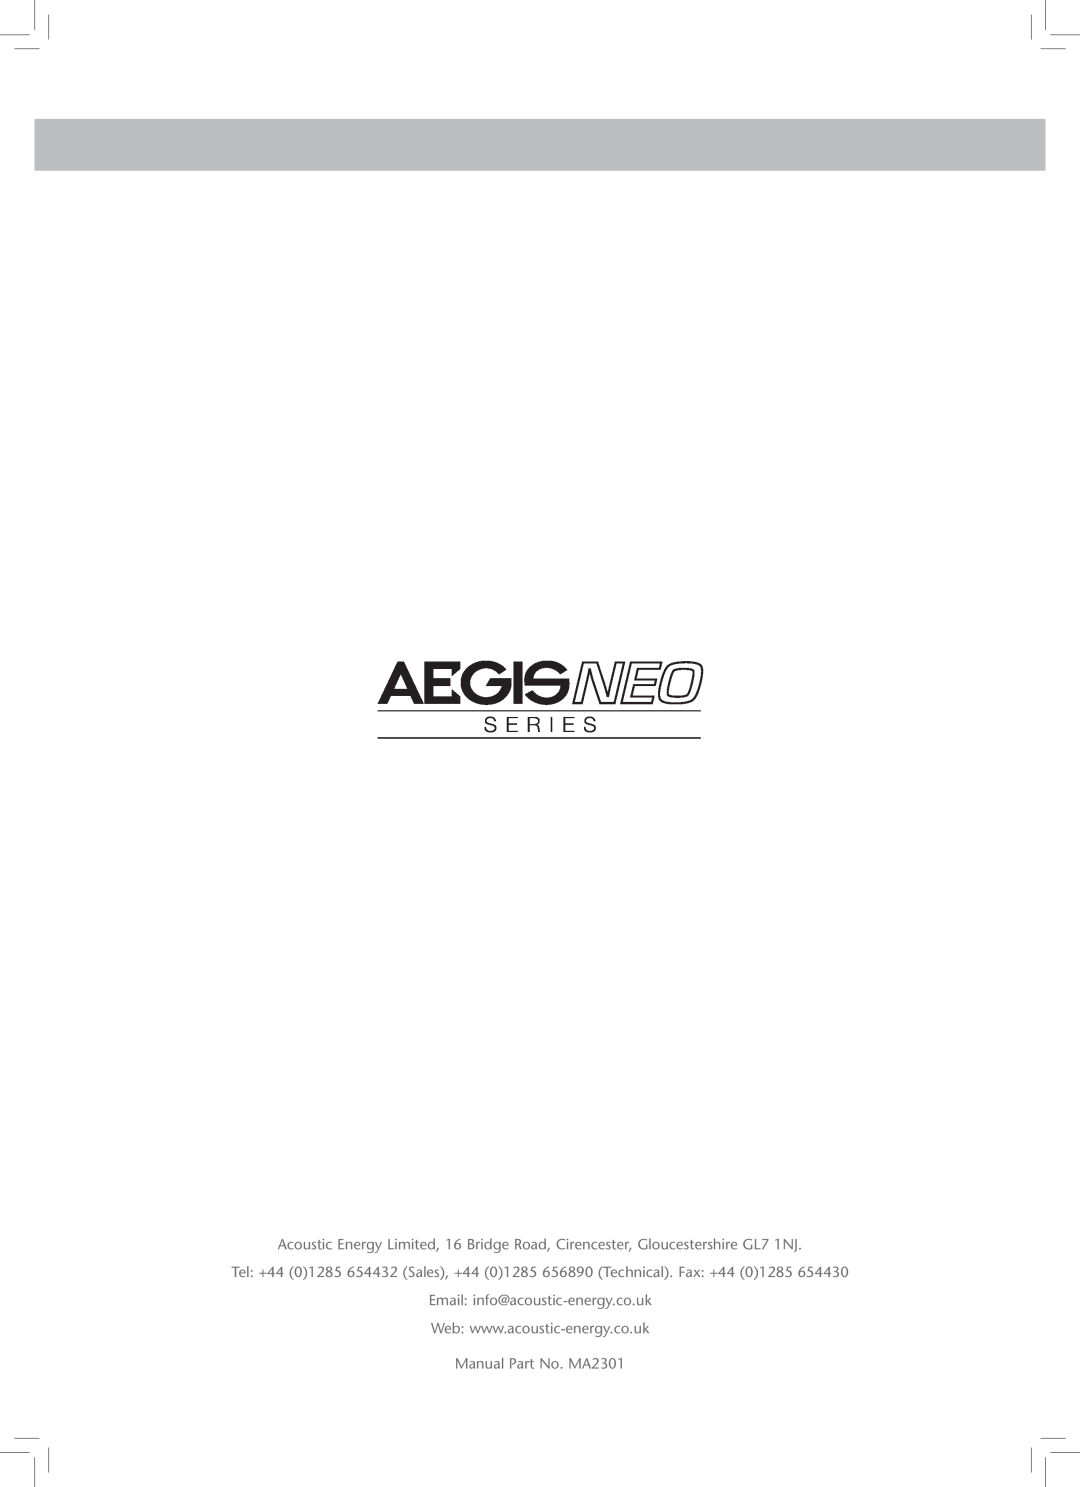 Aegis Micro AegisNeo Series owner manual S E R I E S, Email info@acoustic-energy.co.uk, Manual Part No. MA2301 